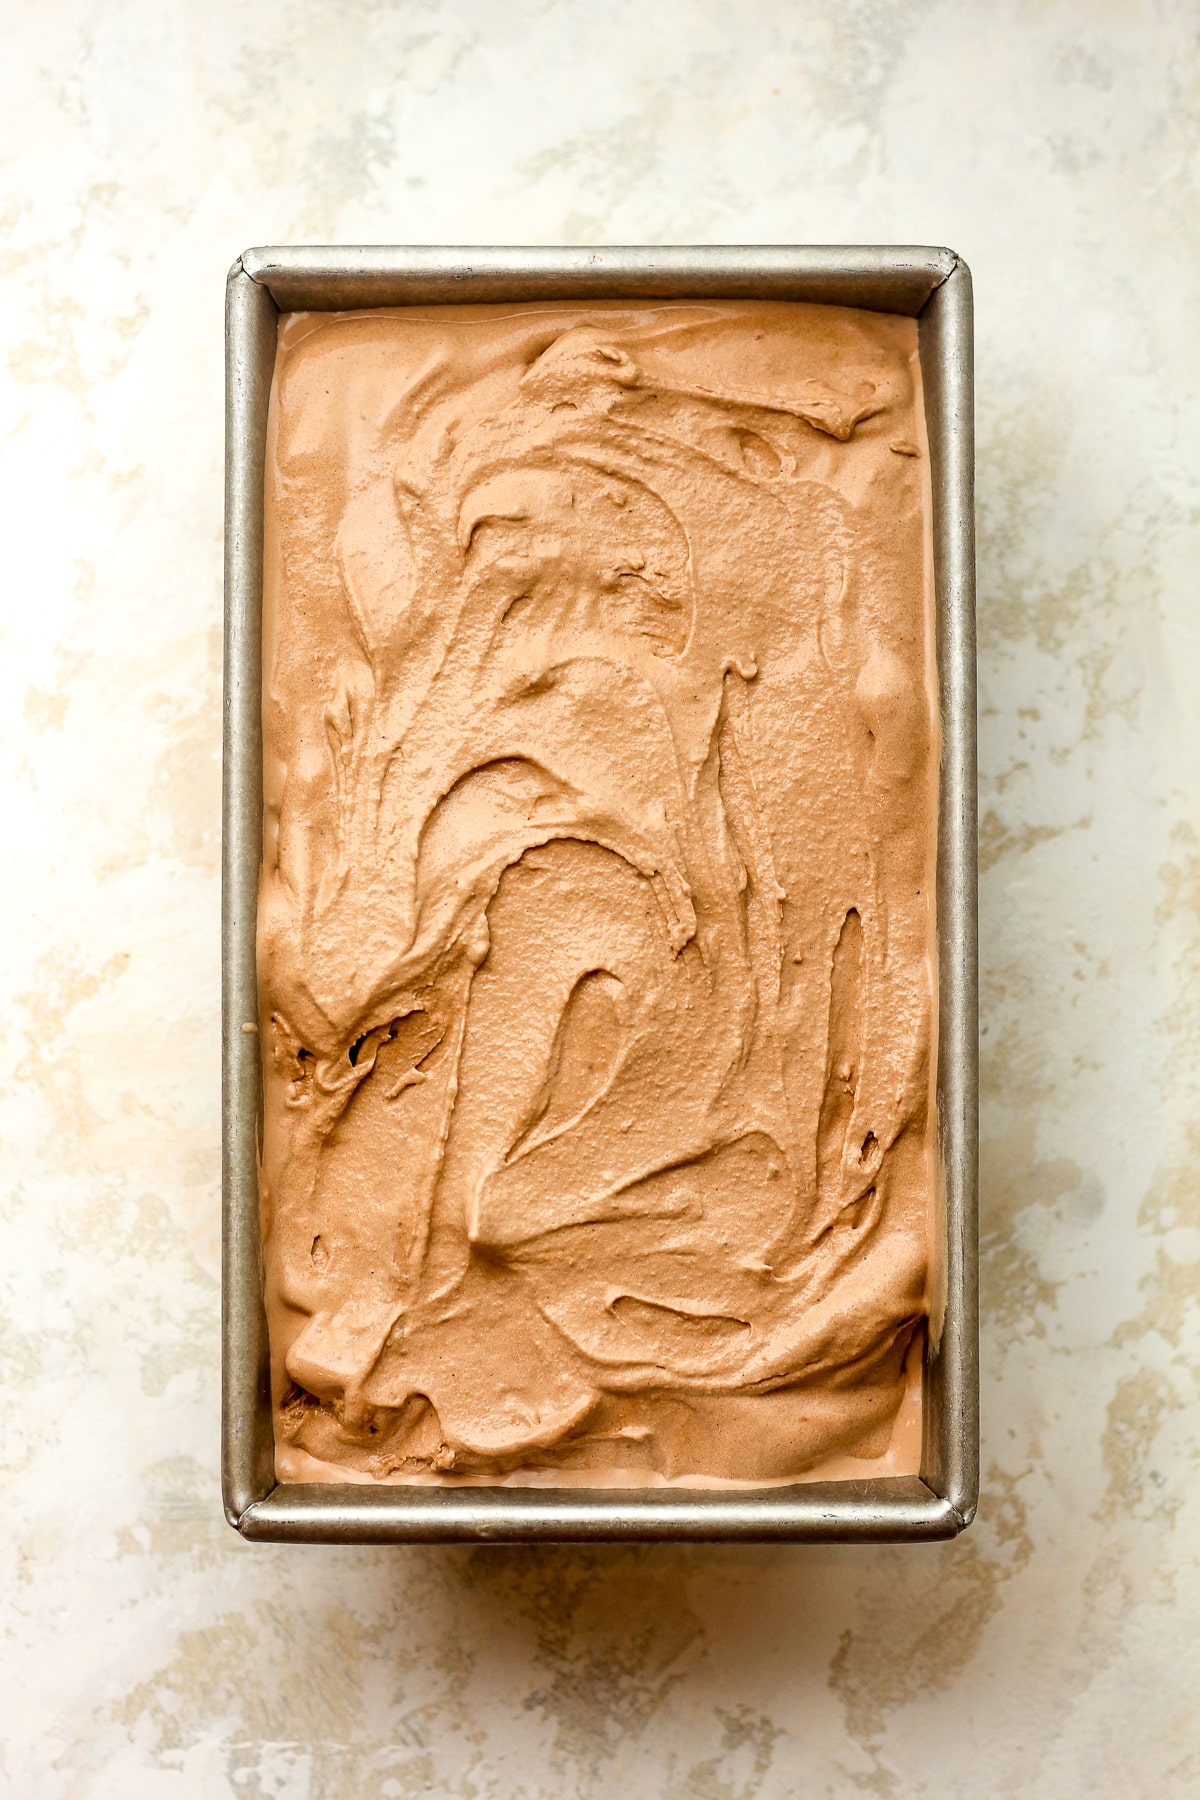 A rectangular pan of creamy chocolate ice cream.